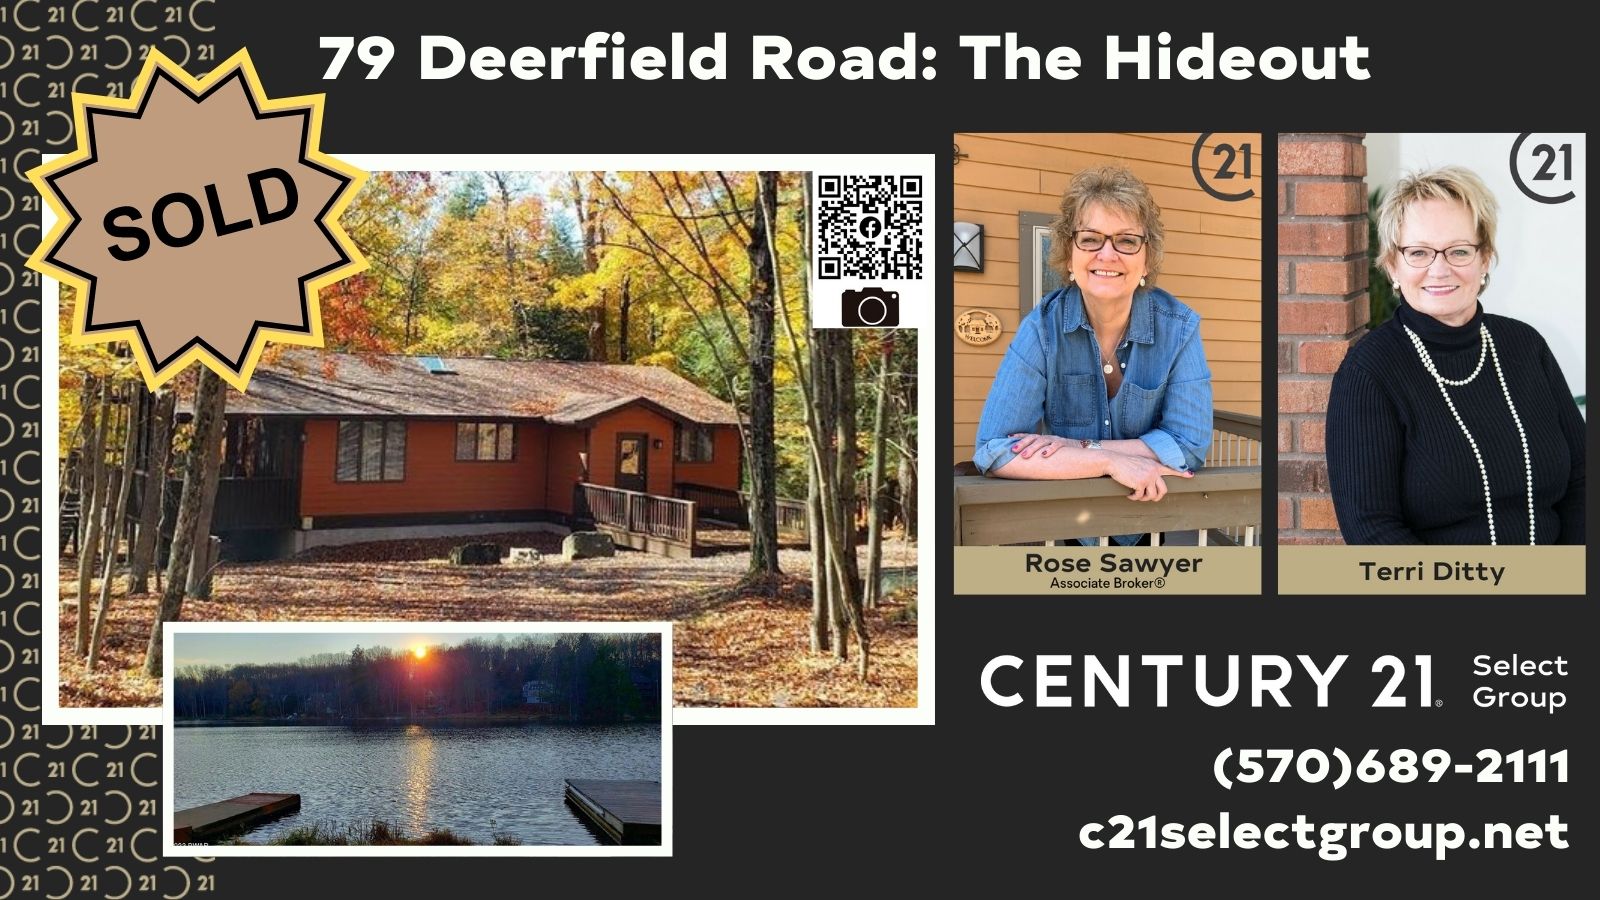 SOLD! 79 Deerfield Road: The Hideout Community